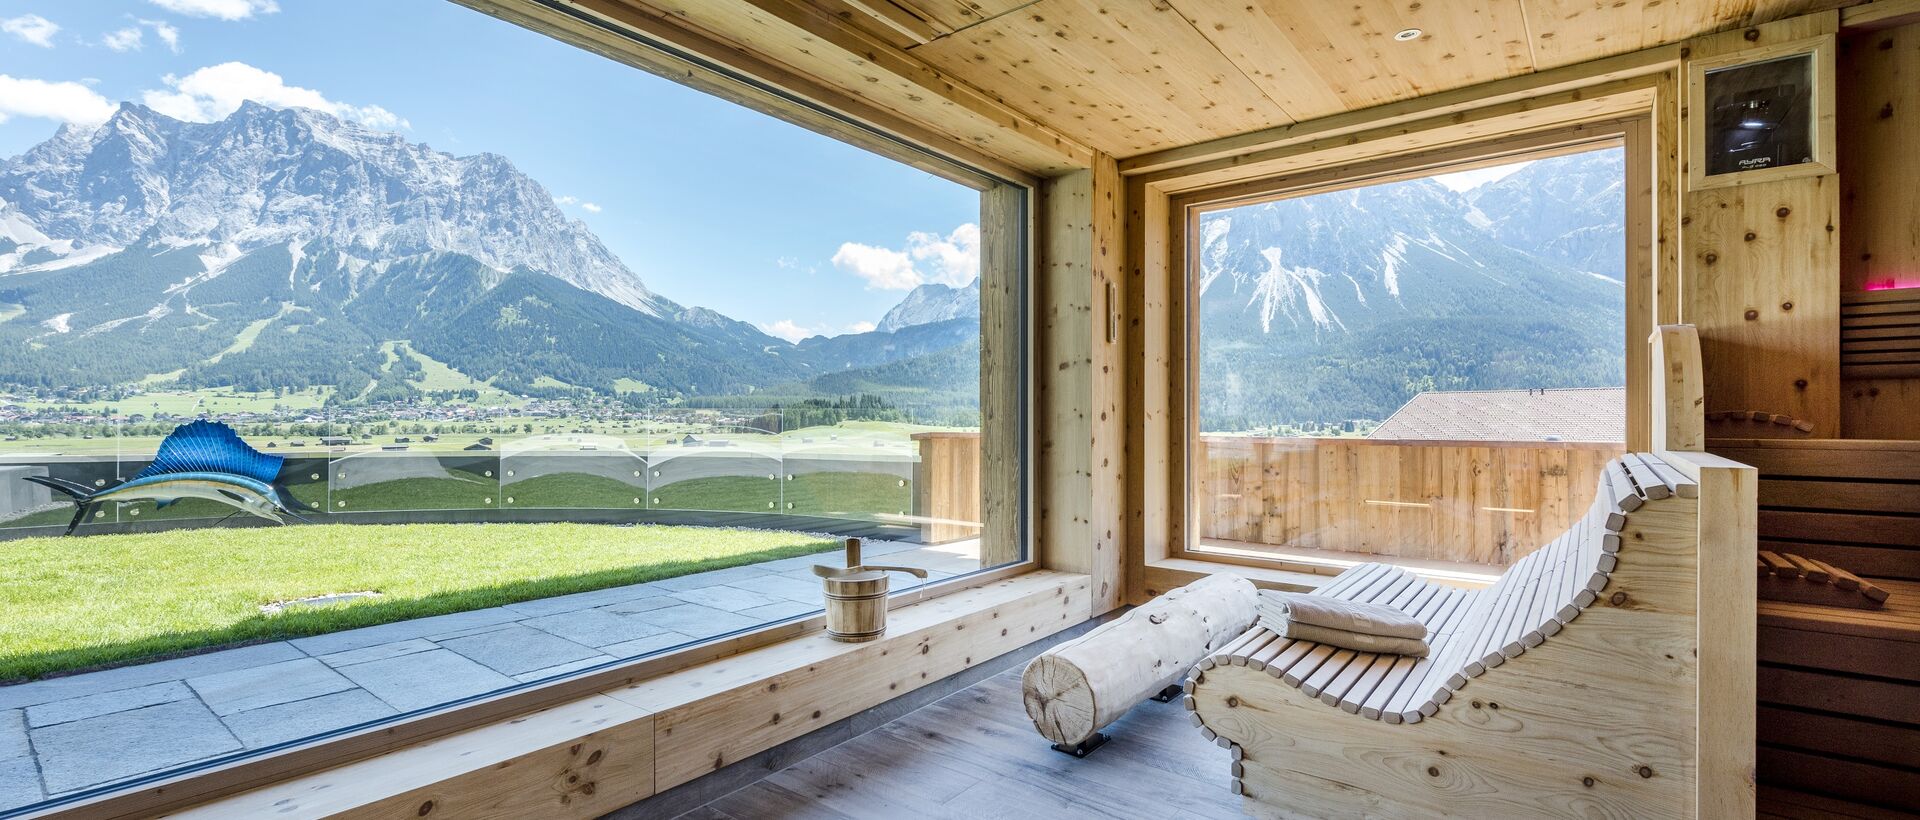 Sauna mit Bergblick | Wellnesshotel Post, Tirol 